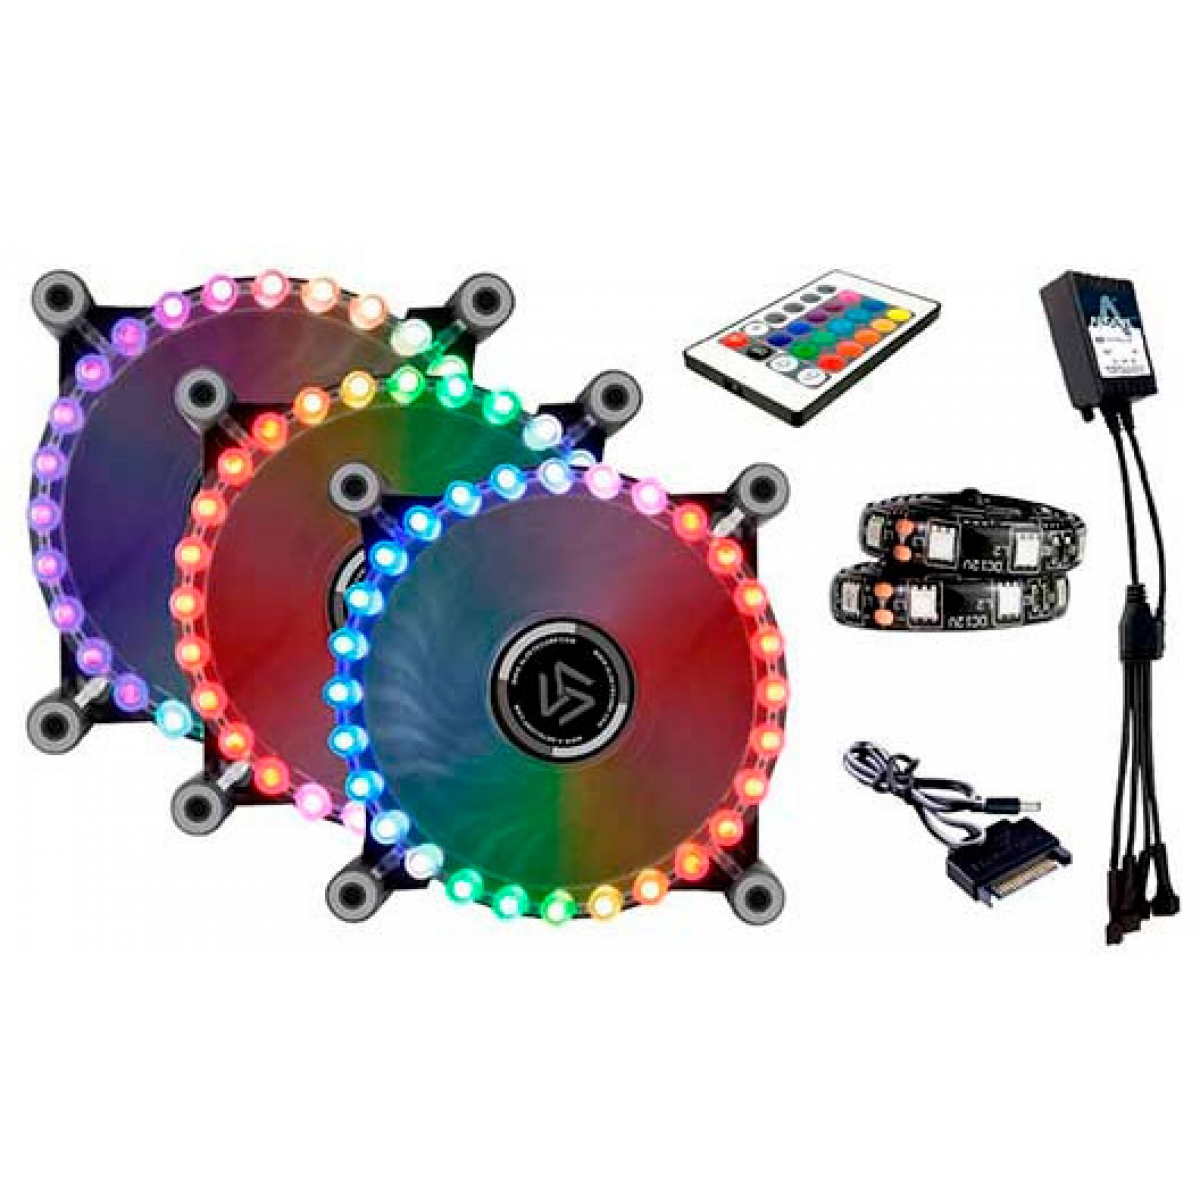 Kit Fan com 3 Unidades Alseye Gatling, RGB 120mm, Fita LED Rainbow, com Controlador, CRLS-300G